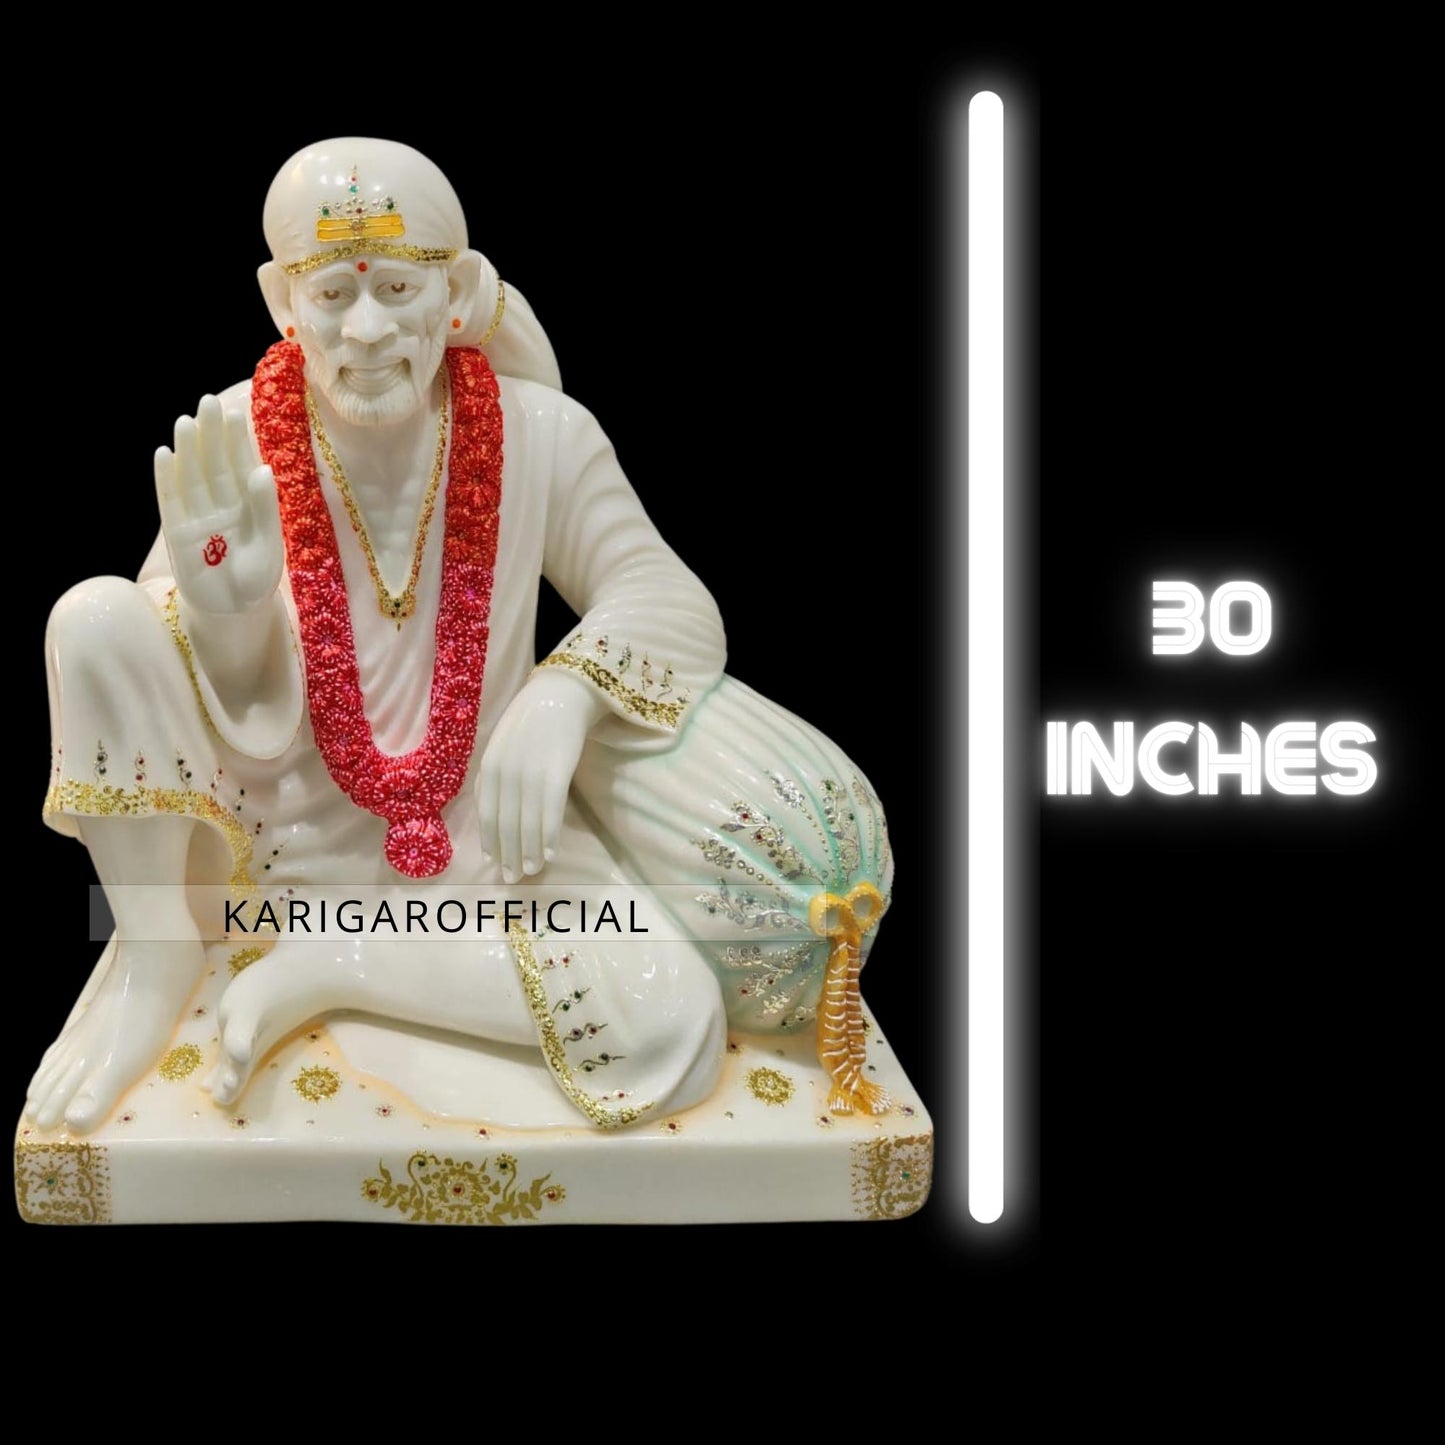 Estatua de Sai Baba, Satya Sai Murti de mármol blanco, ídolo Sai Baba grande de 30 pulgadas, figura de Sai Baba Divina Hindú del Dios desinteresado, escultura de Shirdi Sai Baba, regalos de inauguración del templo del hogar Sri DattaGuru